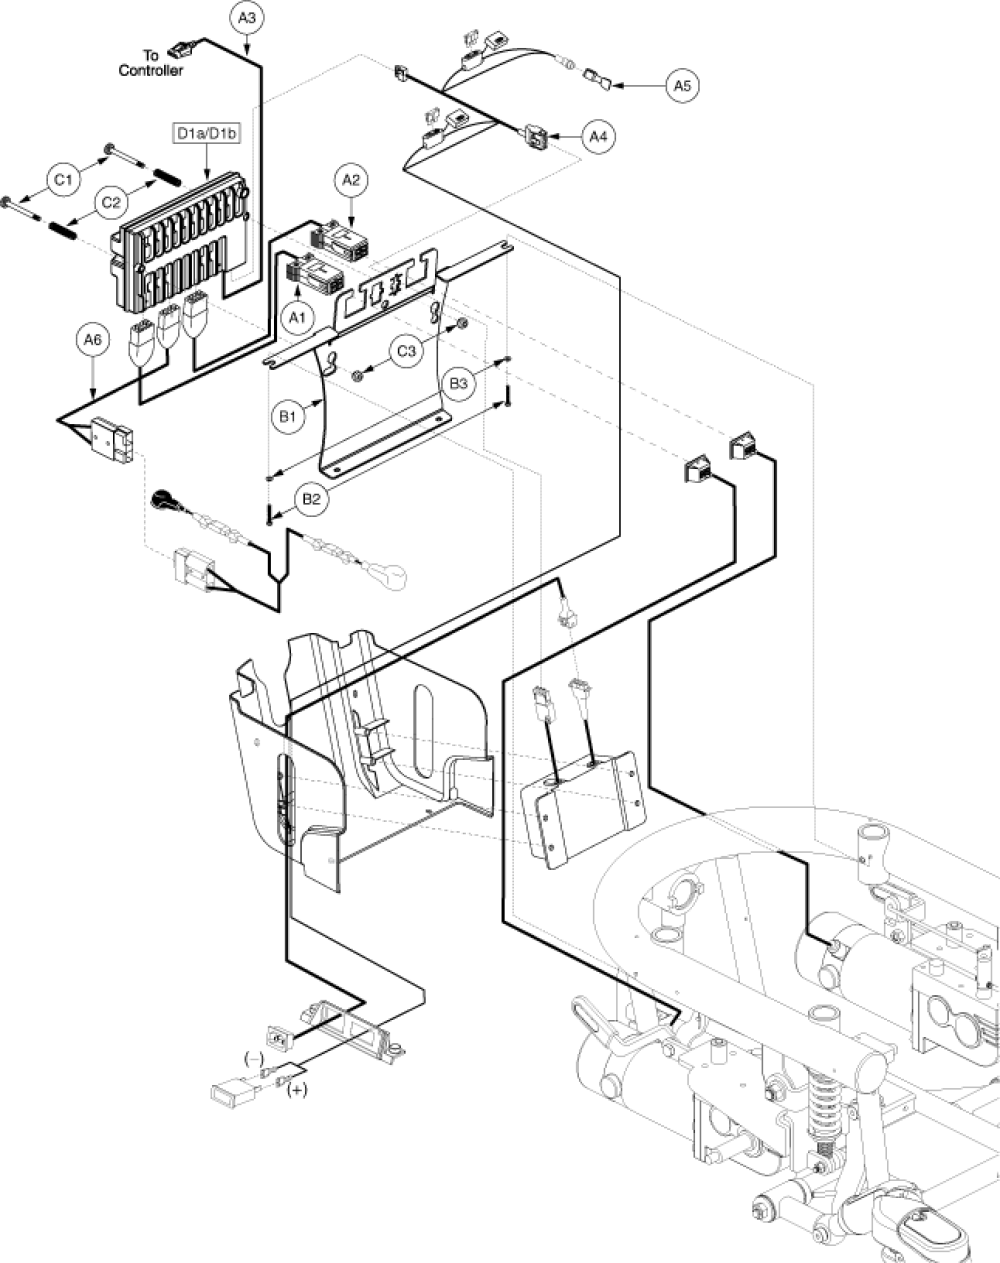 Electronics Assy - Vr2, Tilt Thru Toggle, Onboard parts diagram